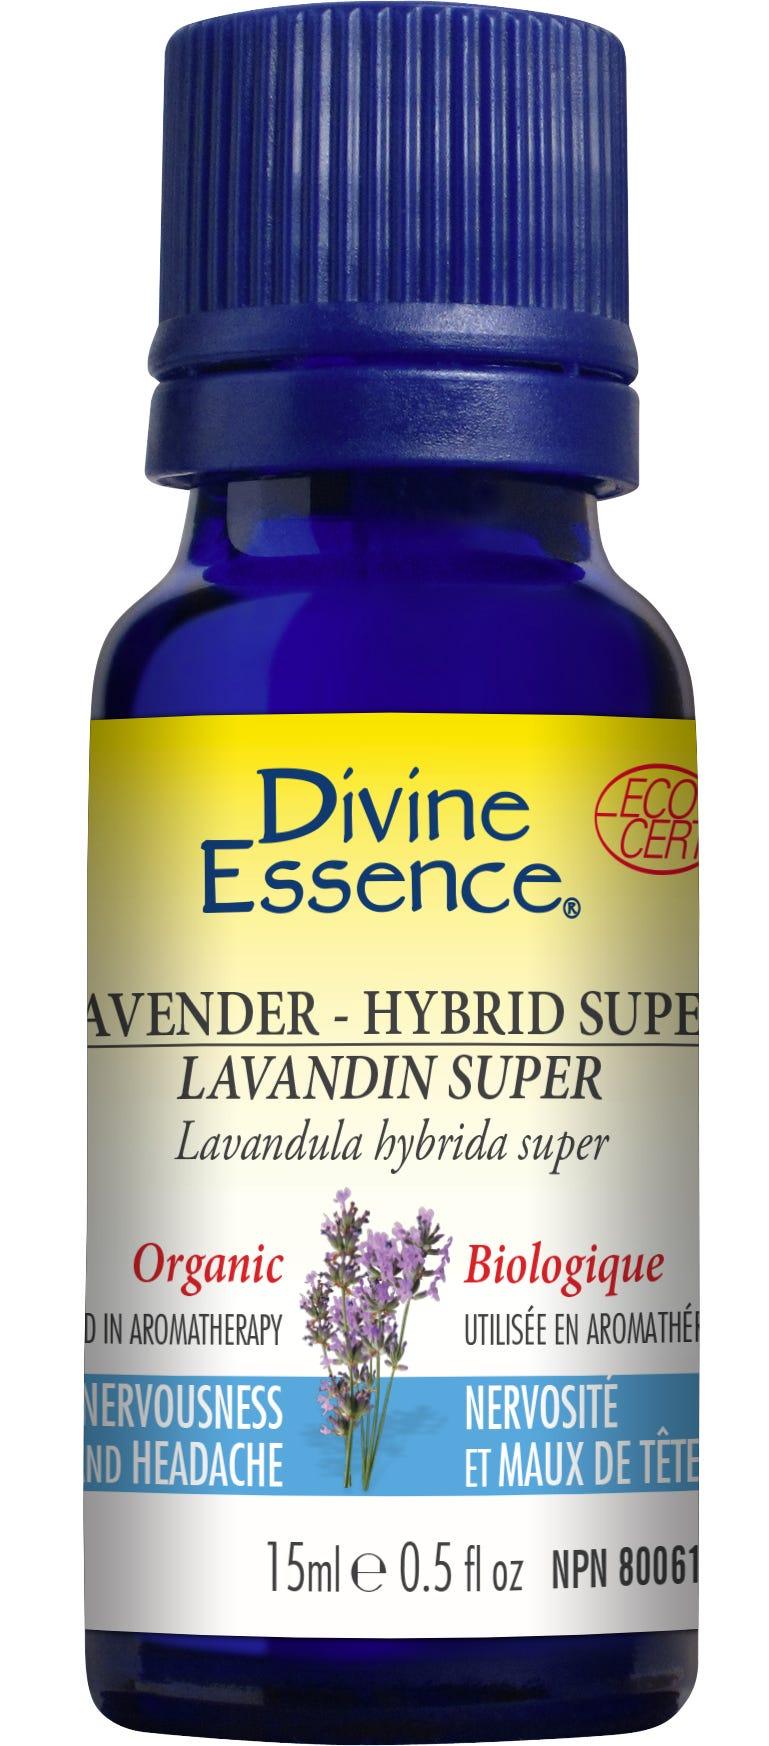 Divine Ess Lavender Hybrid Super Organic 15ml